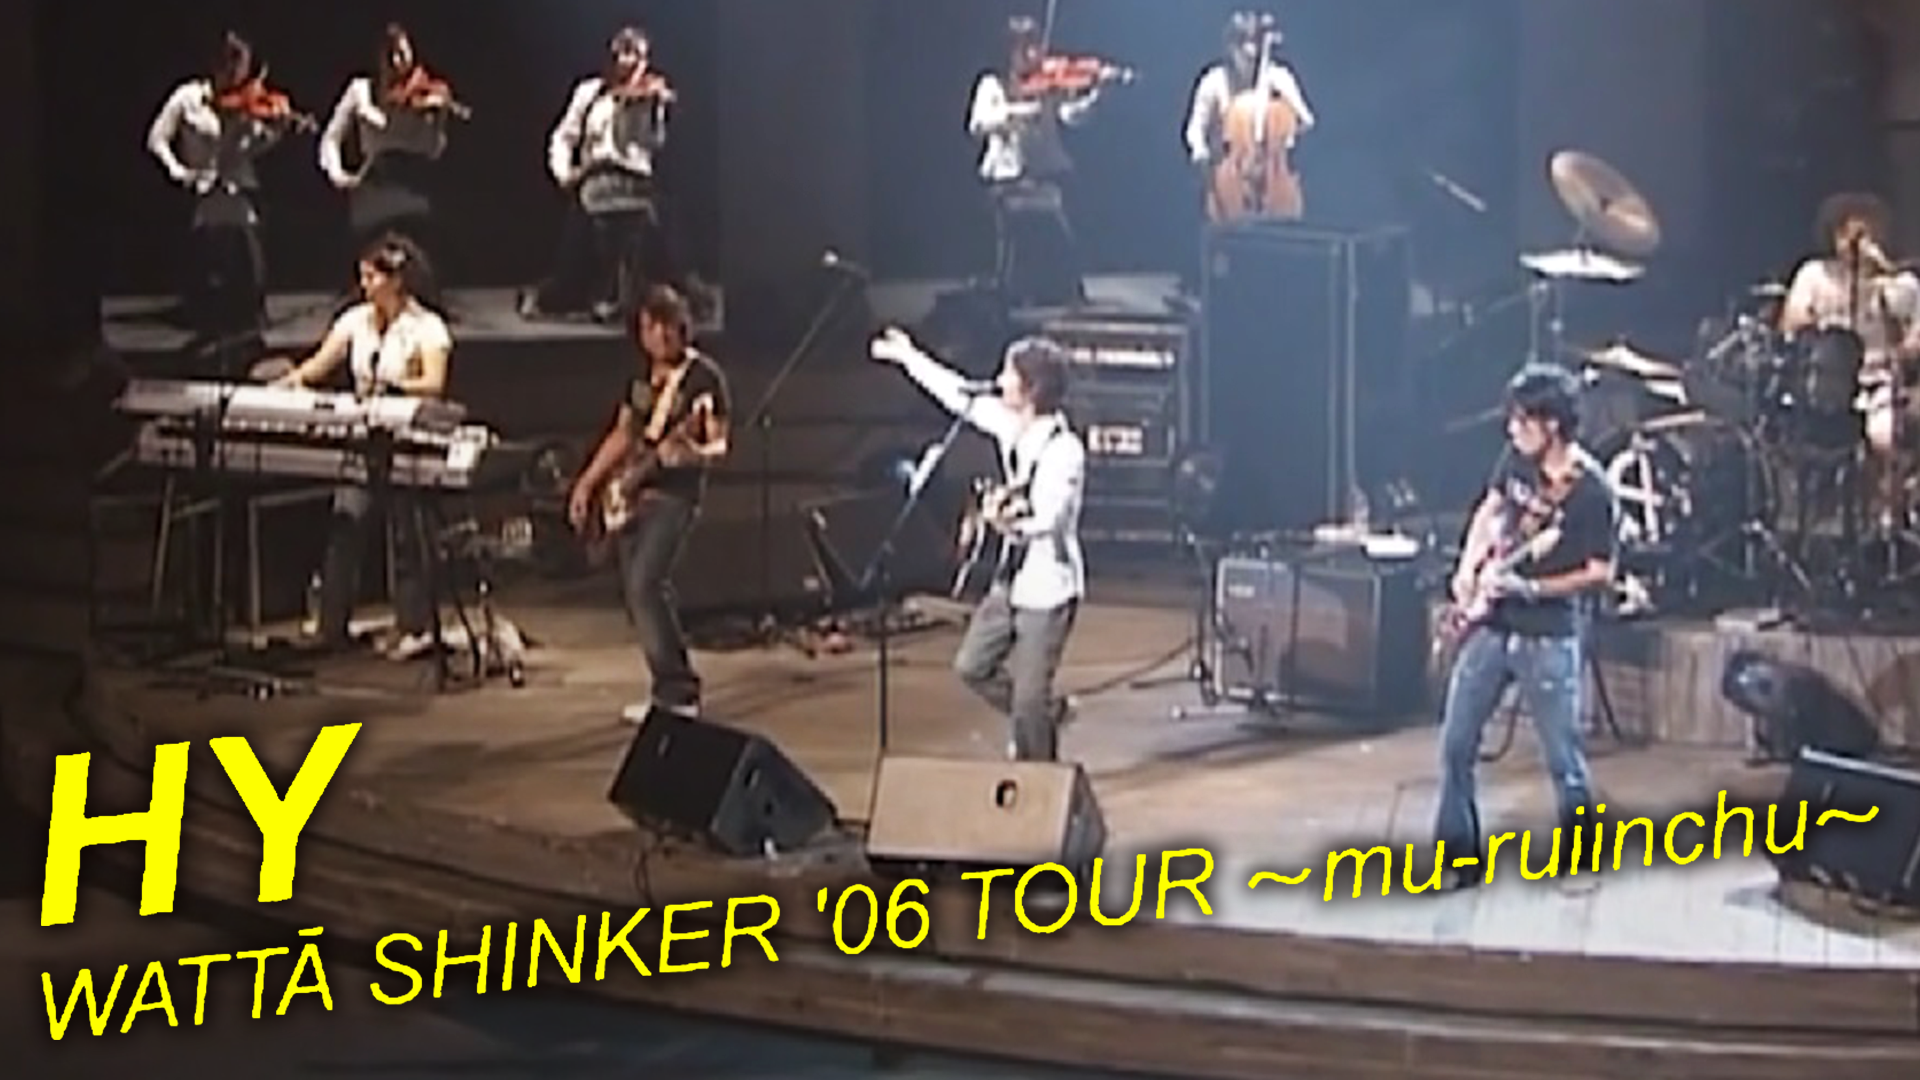 WATTA SHINKER '06 TOUR 〜mu-ruiinchu〜(音楽・アイドル / 2006) - 動画配信 | U-NEXT  31日間無料トライアル